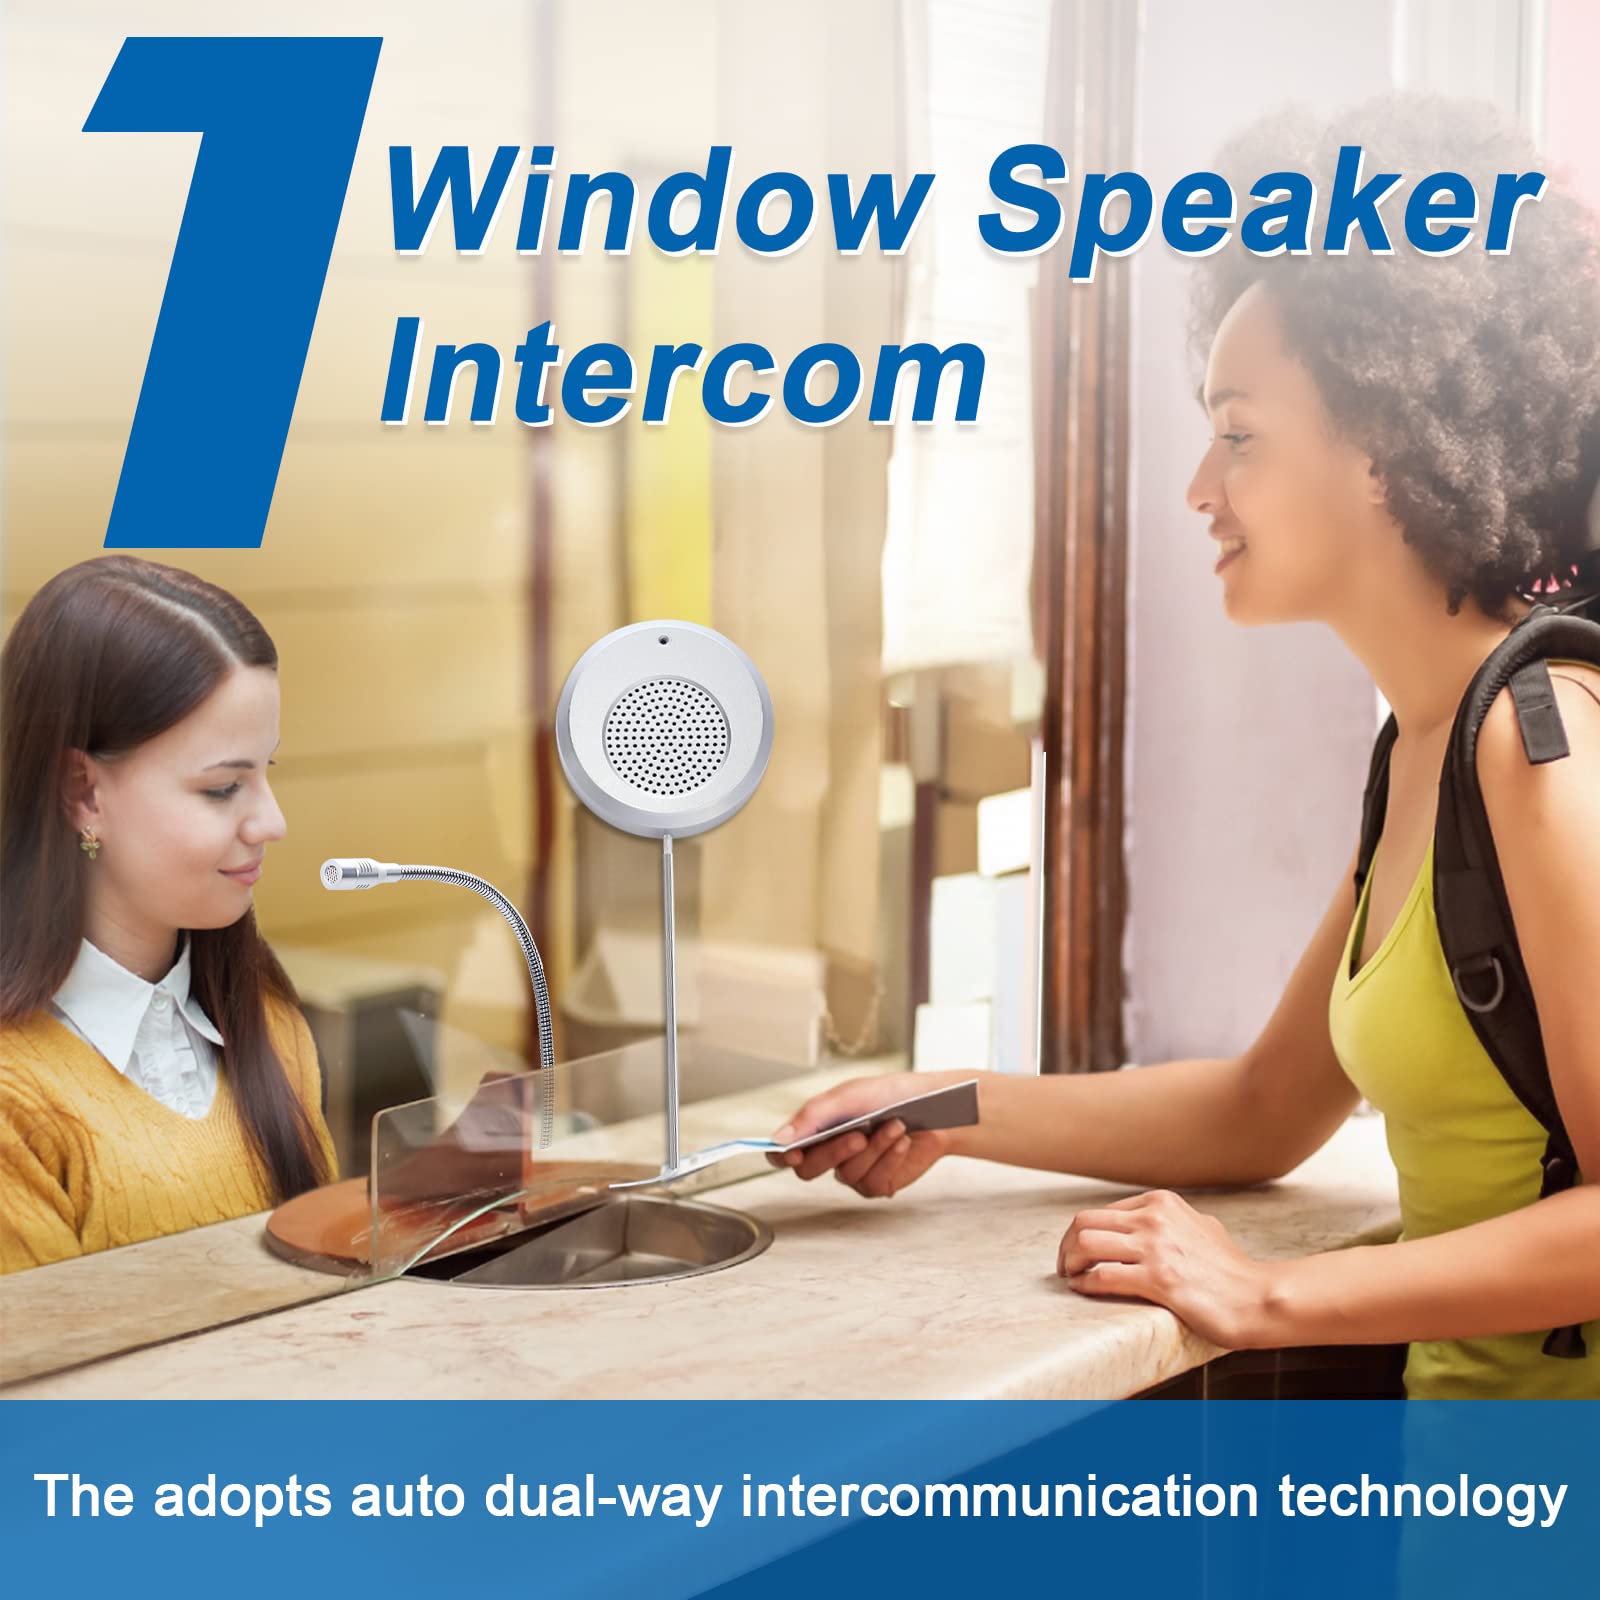 Daytech Window Speaker Intercom System Dual-Way Intercom System for Business Anti-Interference Intercommunication Microphone and Speaker Window Counter Intercom